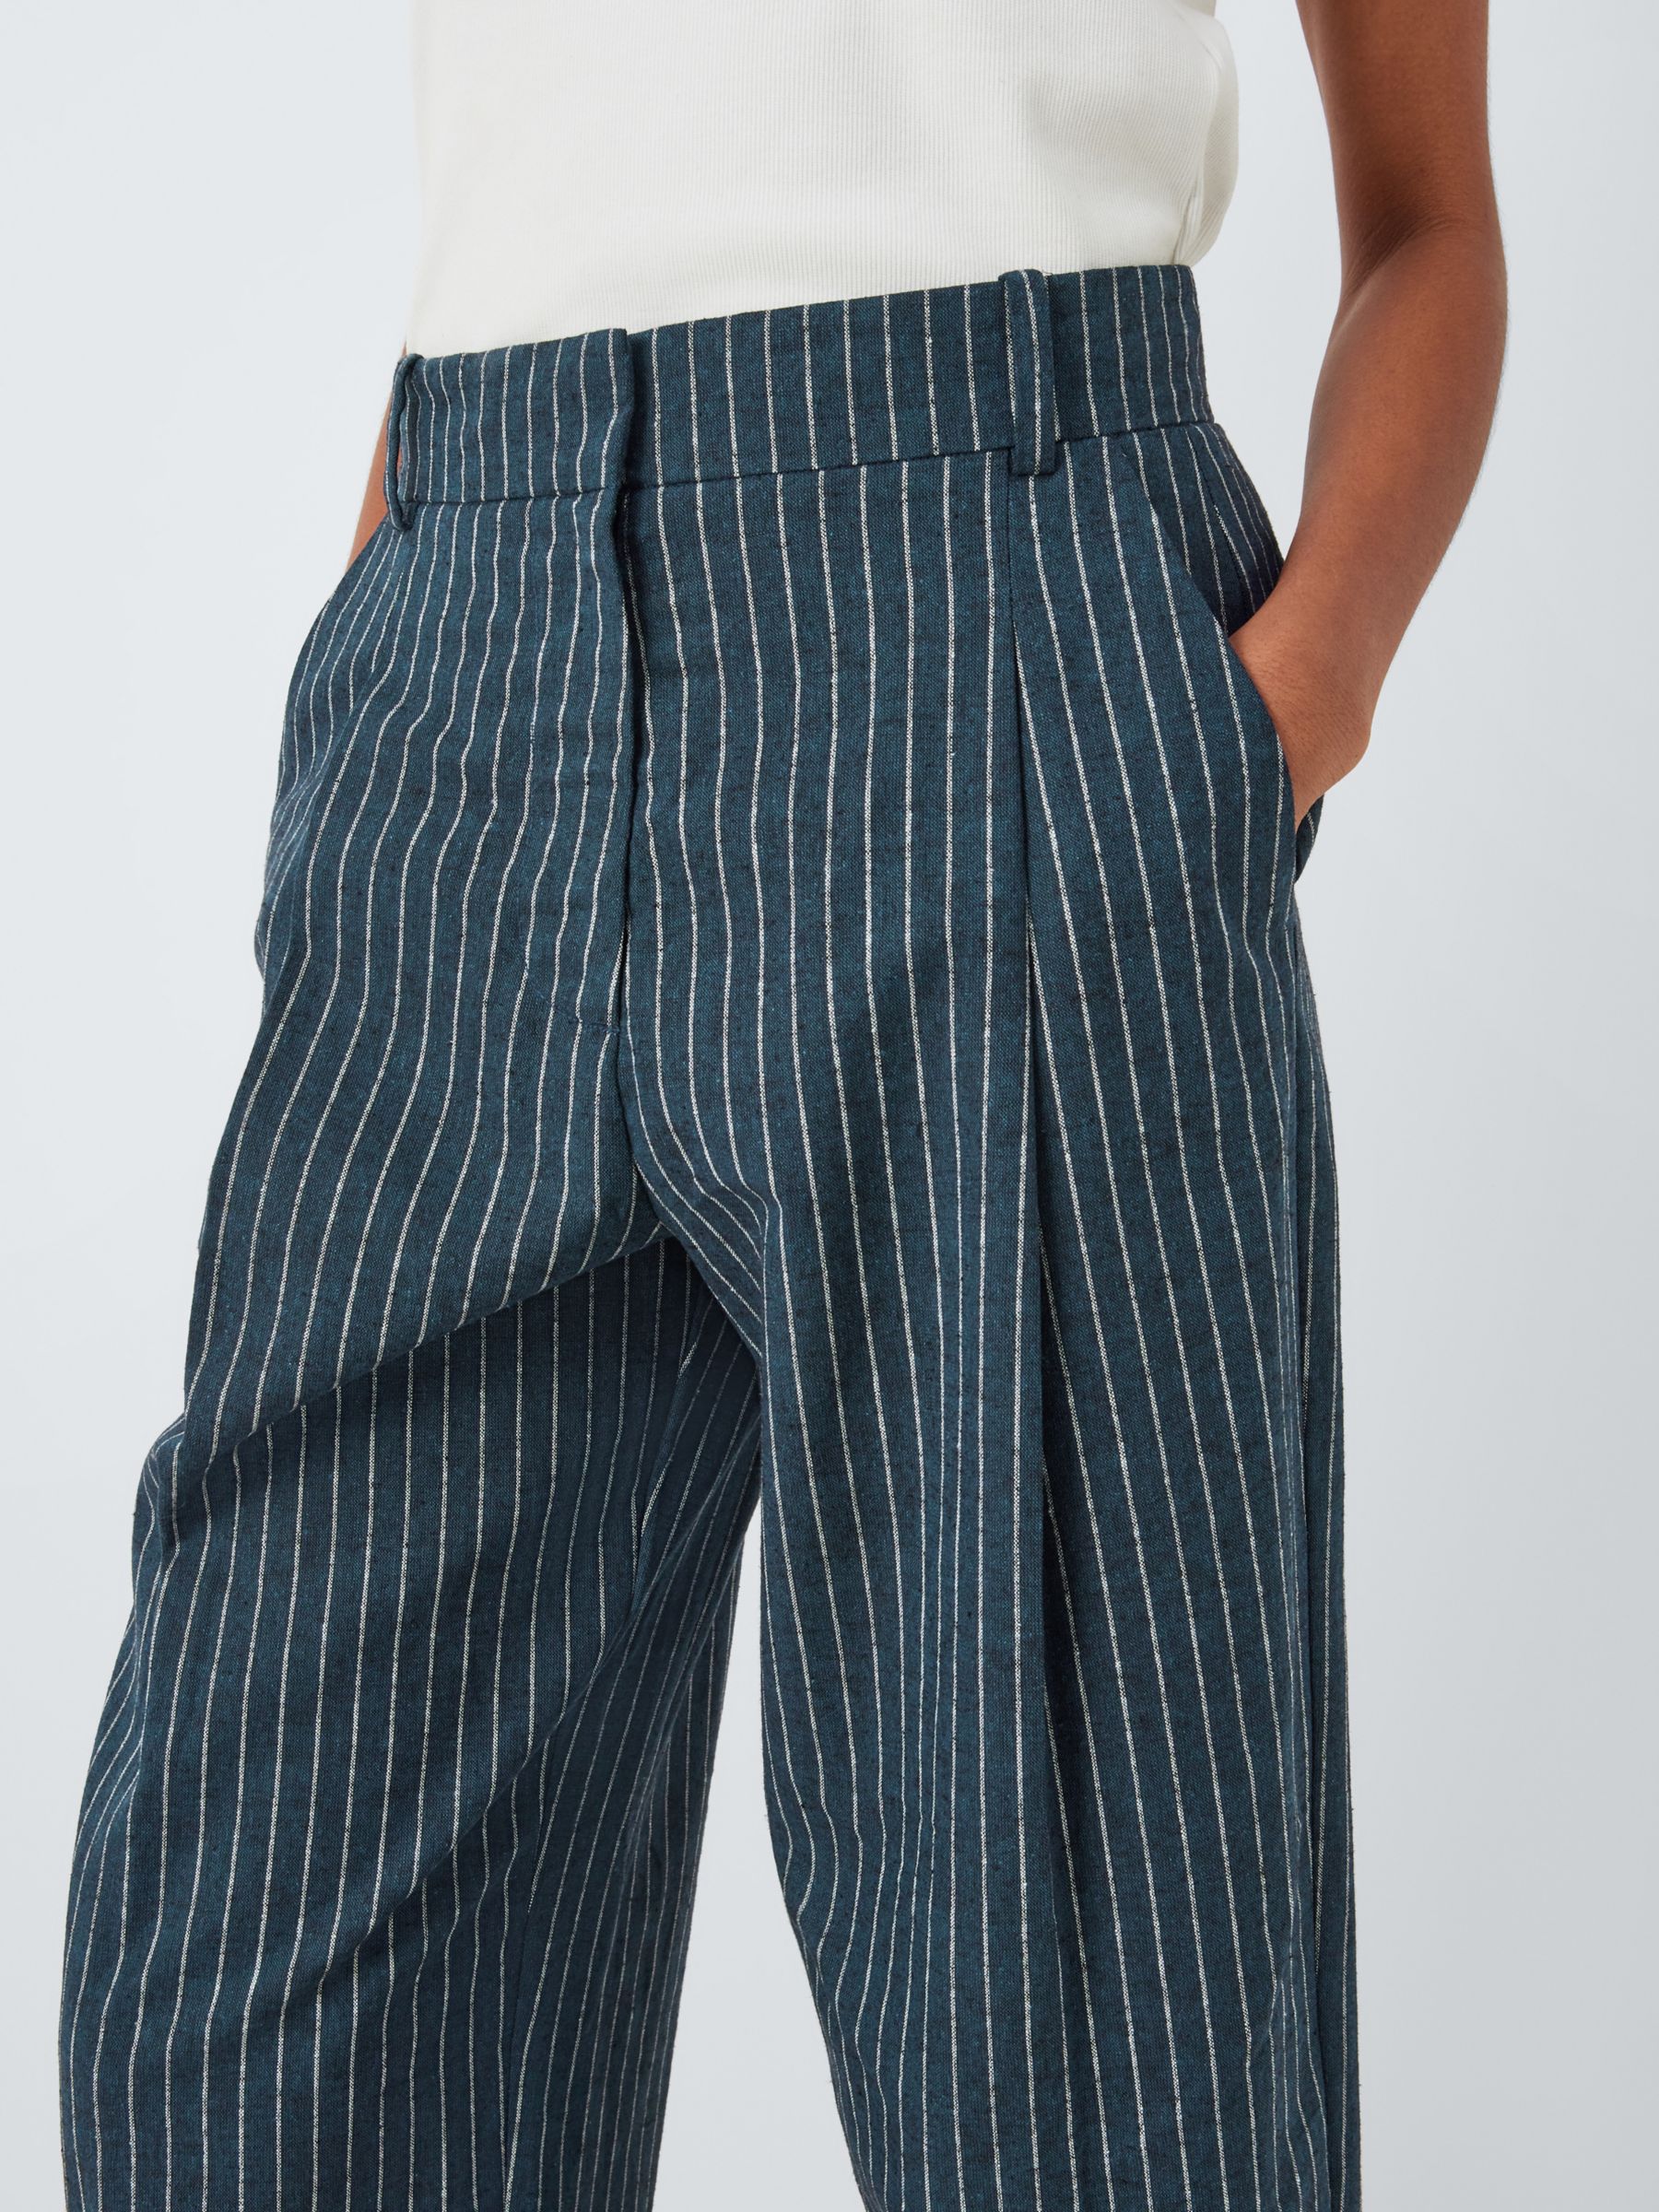 John Lewis Stripe Linen Cropped Trousers, Navy, 8